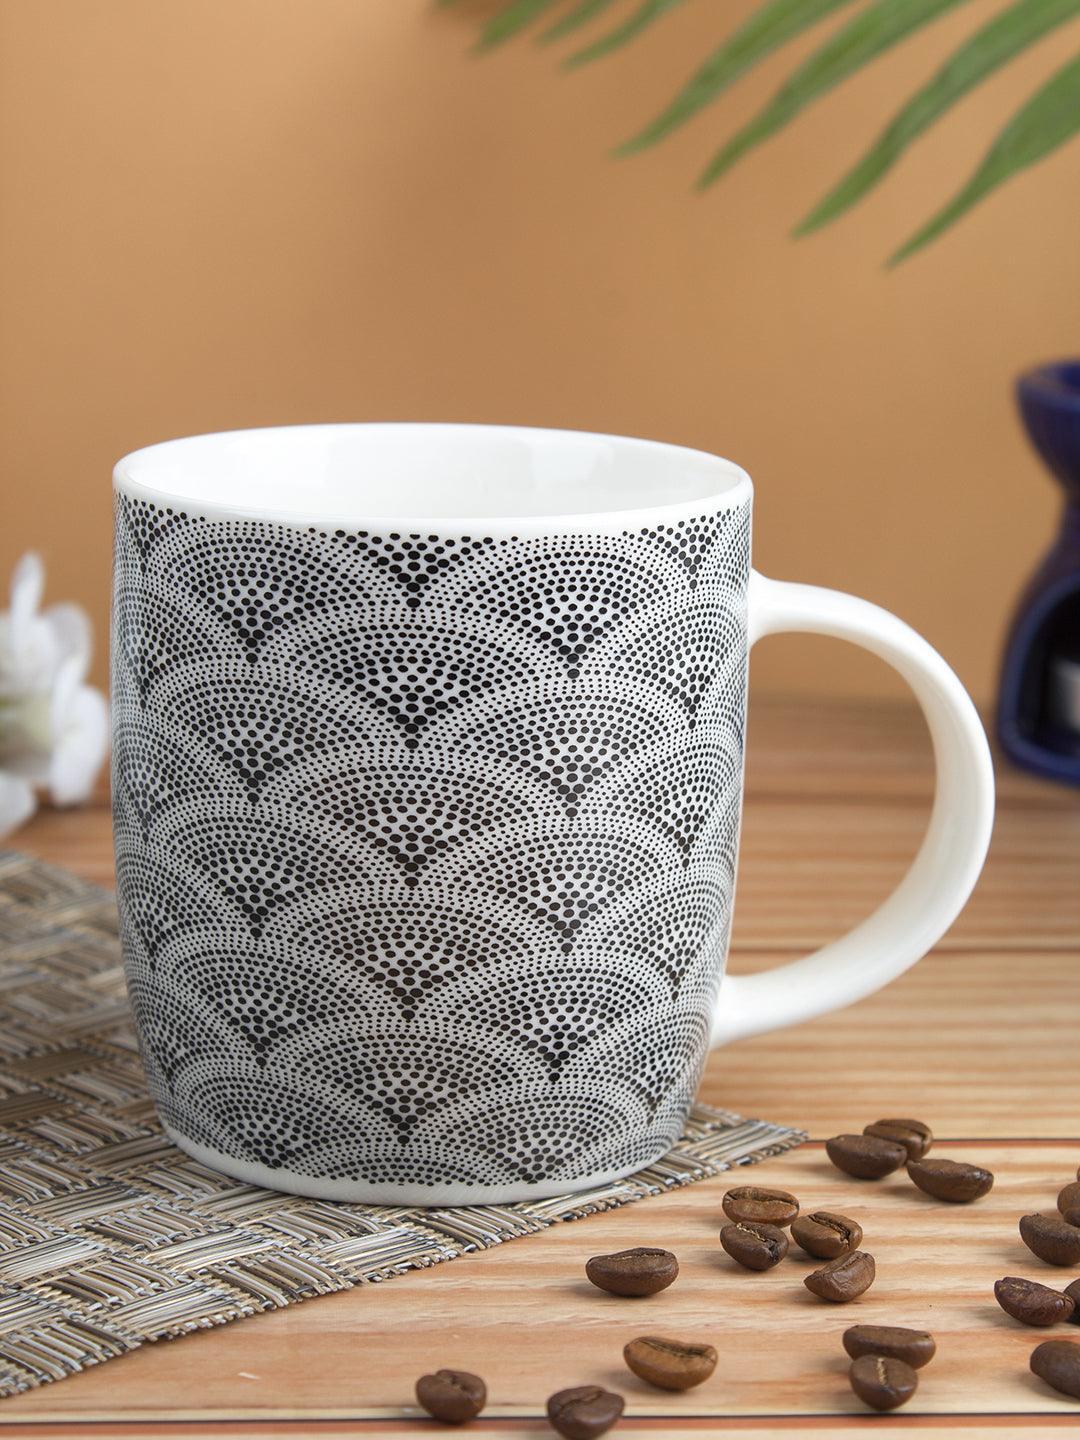 Abstract Ceramic Coffee Mug - 350mL - MARKET 99